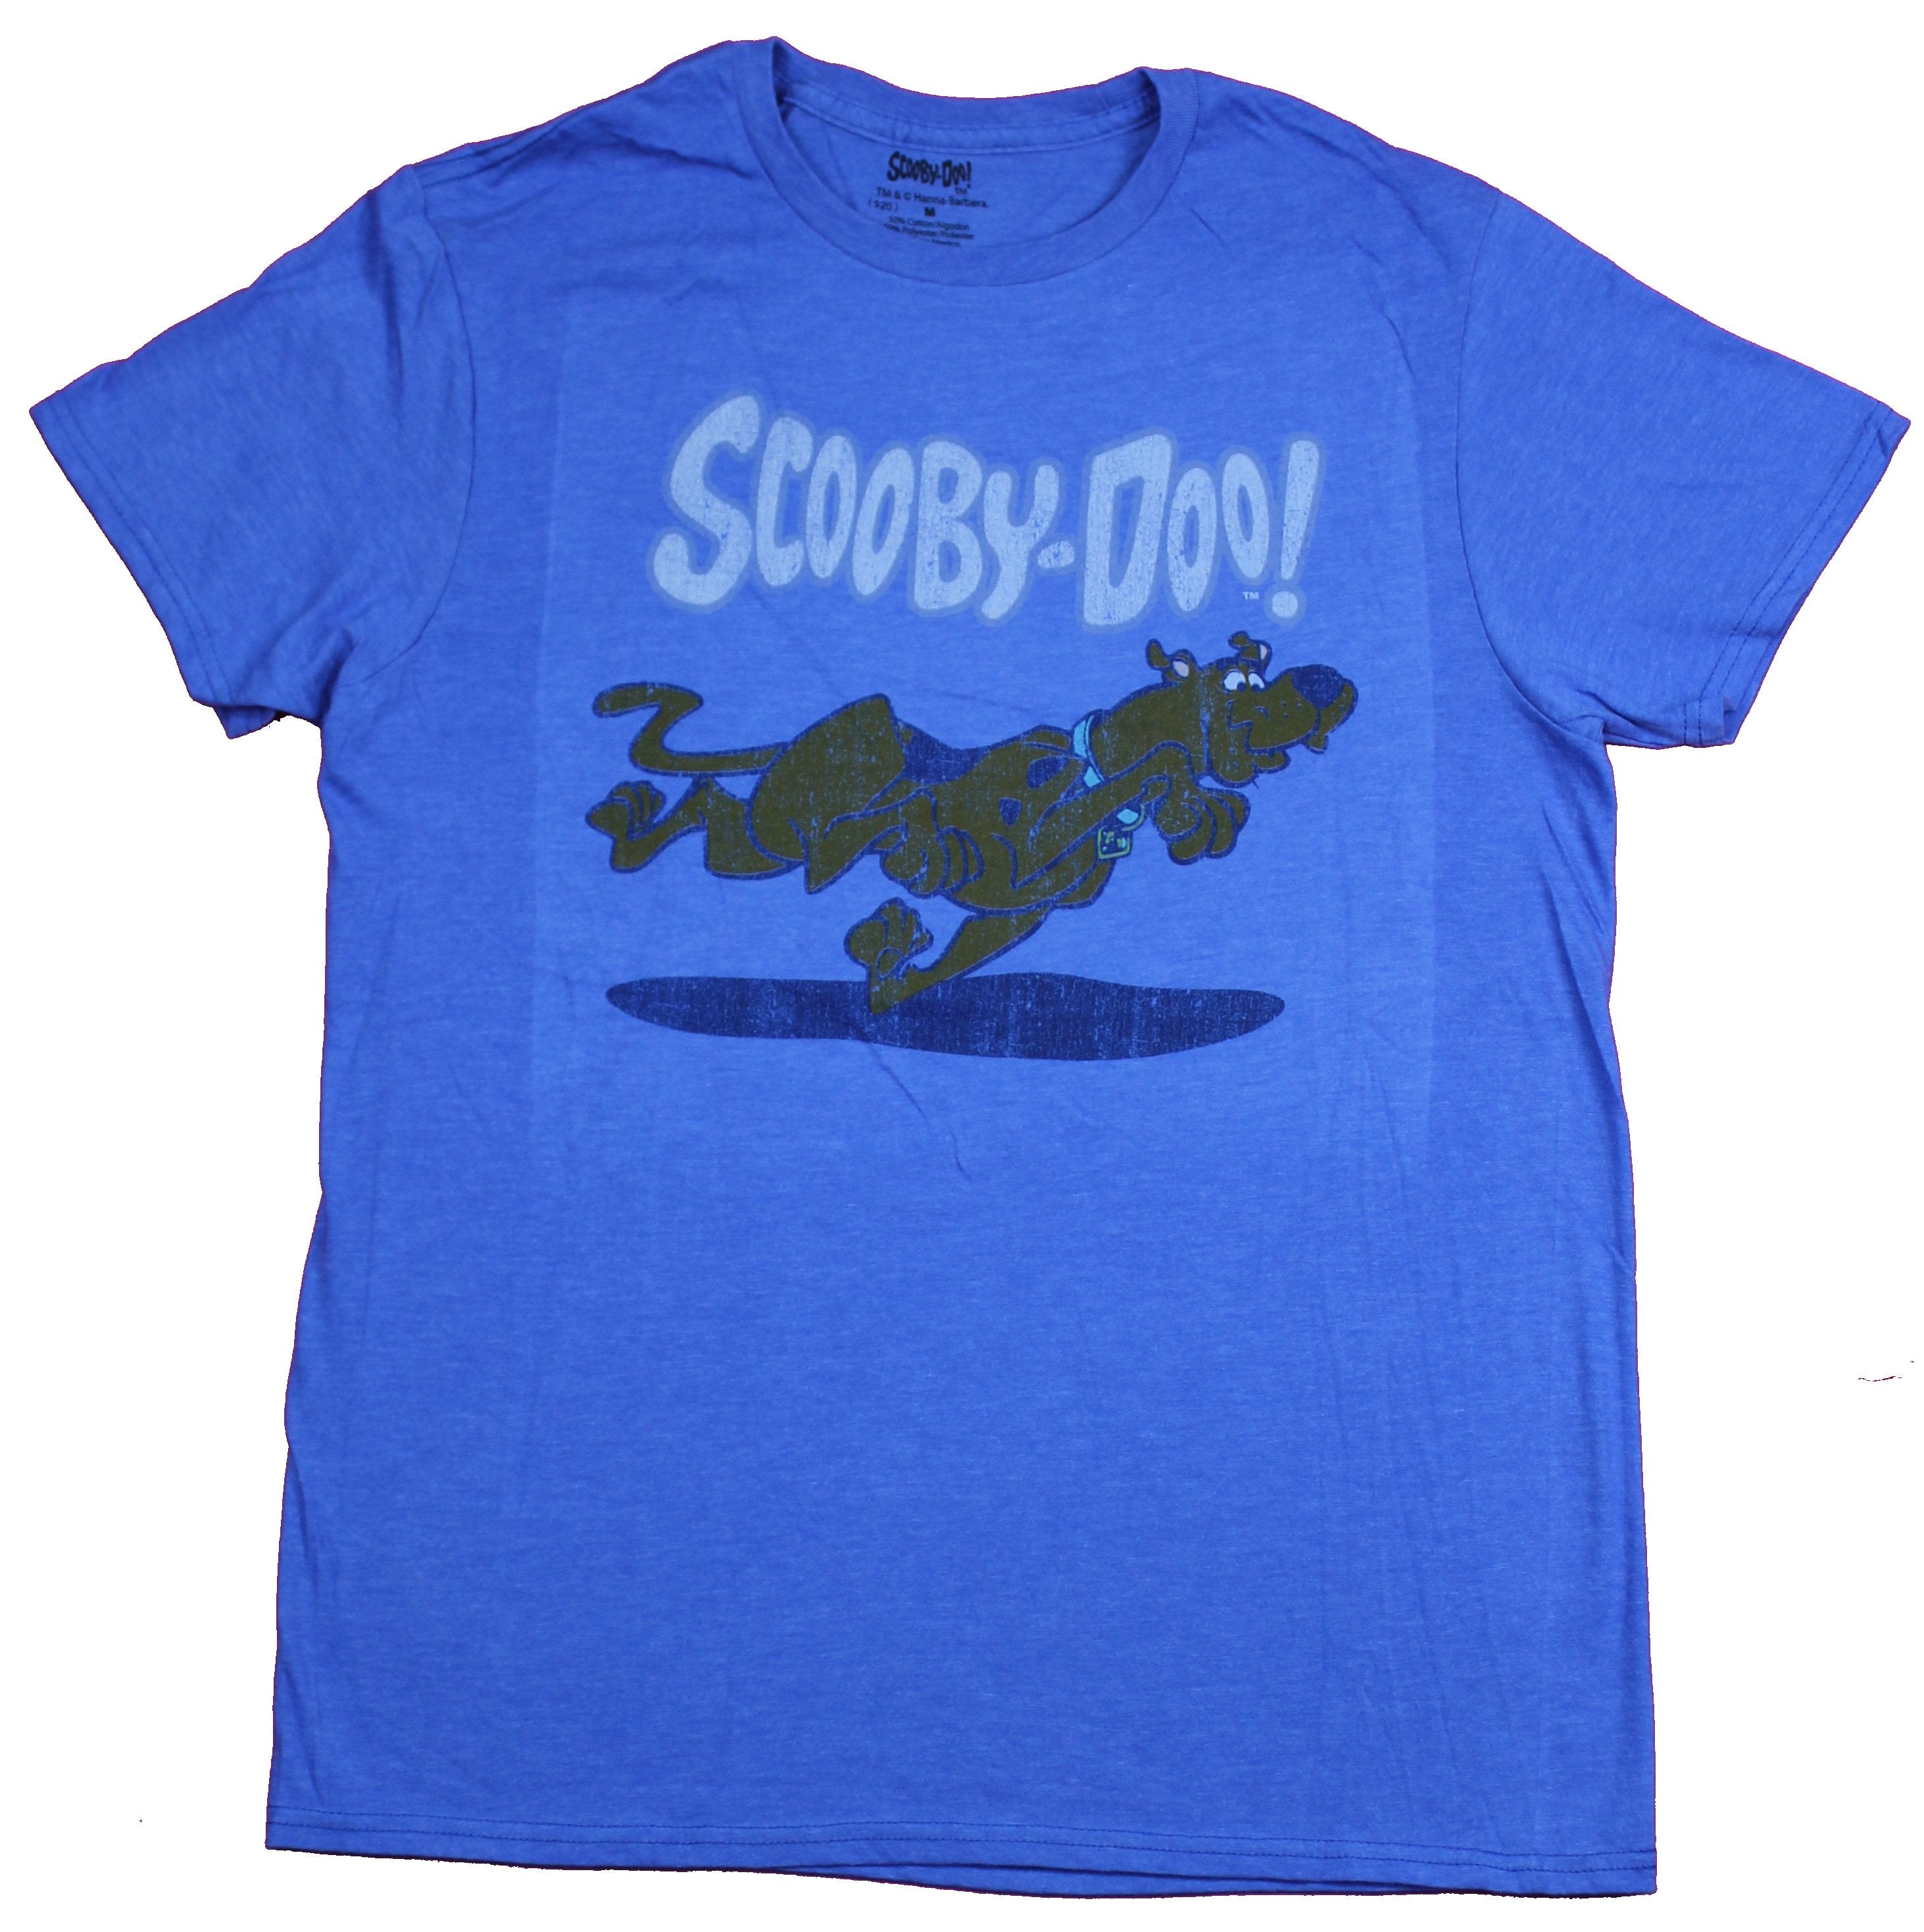 Scooby Doo Mens T-Shirt  - Running Scooby Under Logo Image